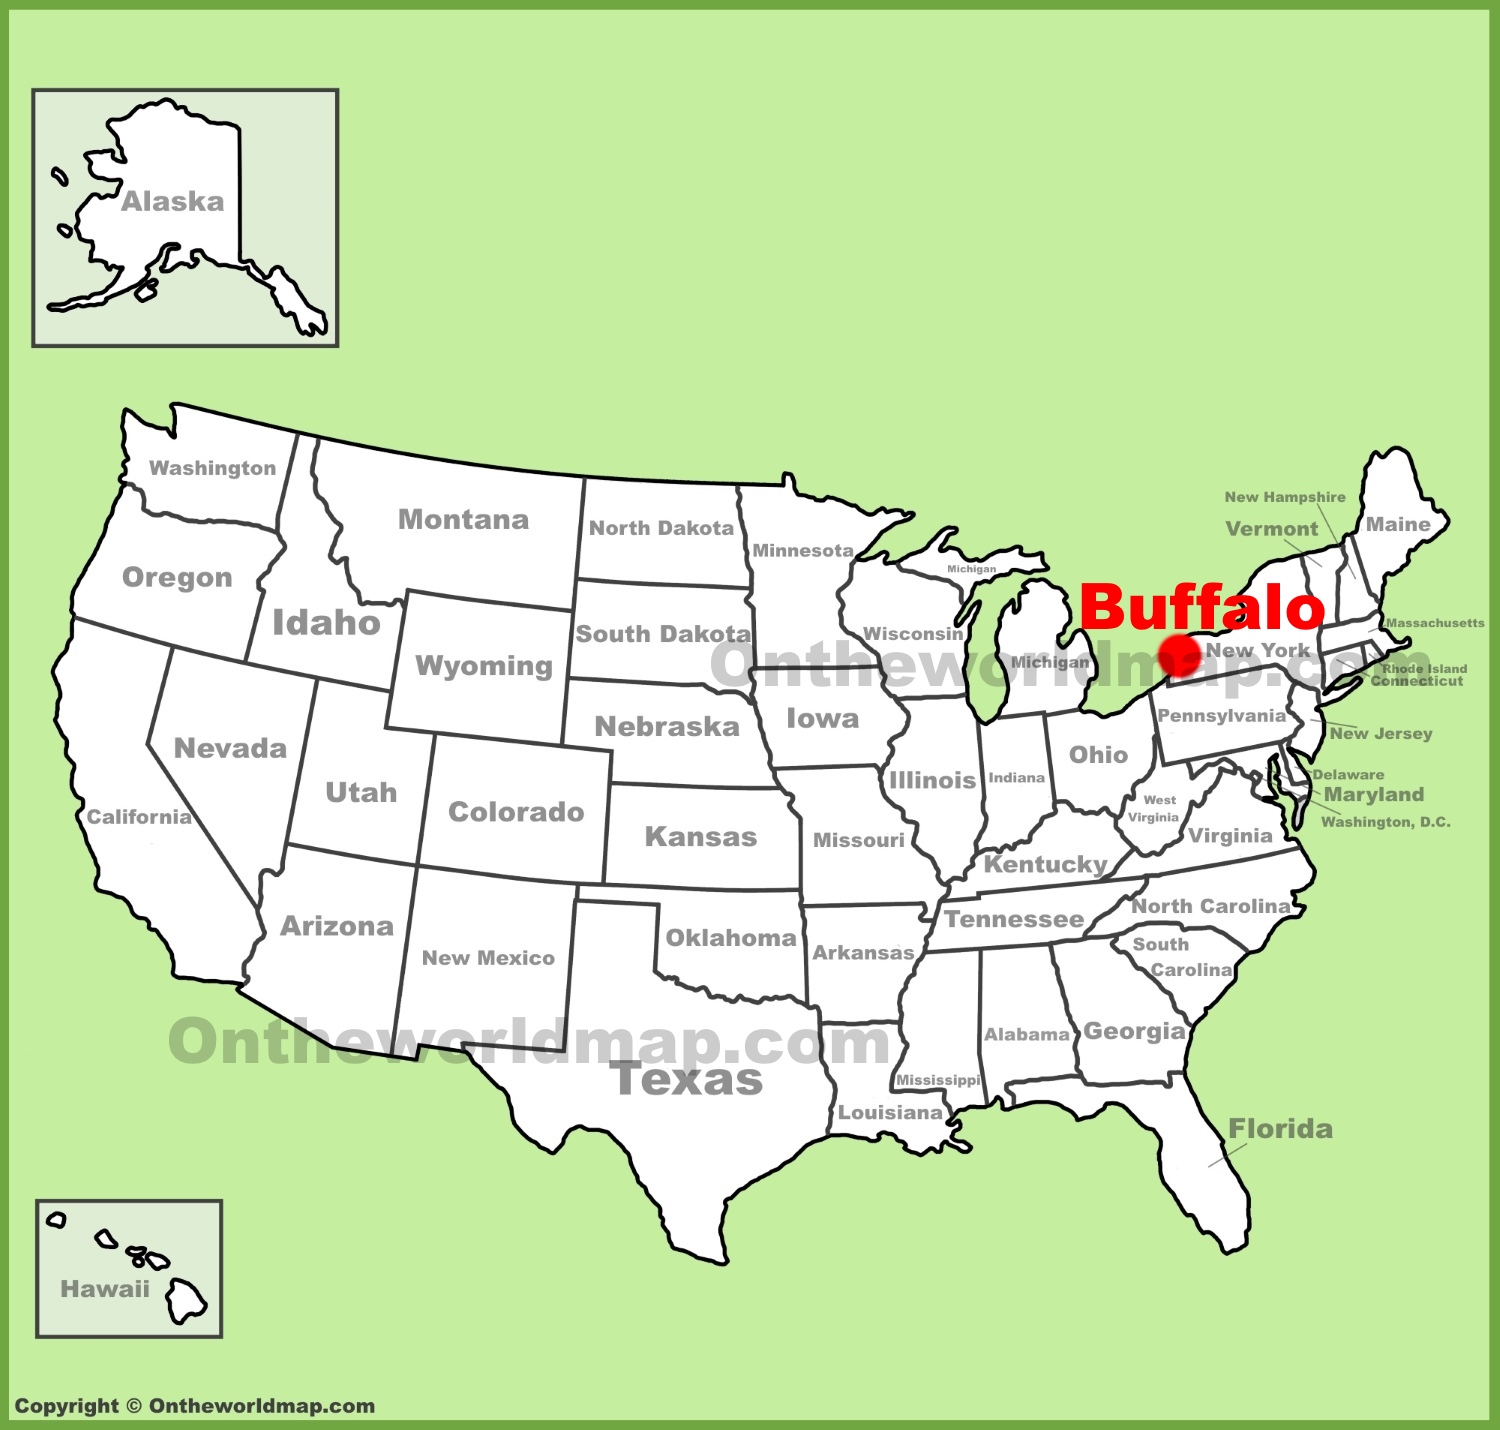 Buffalo location on the Map